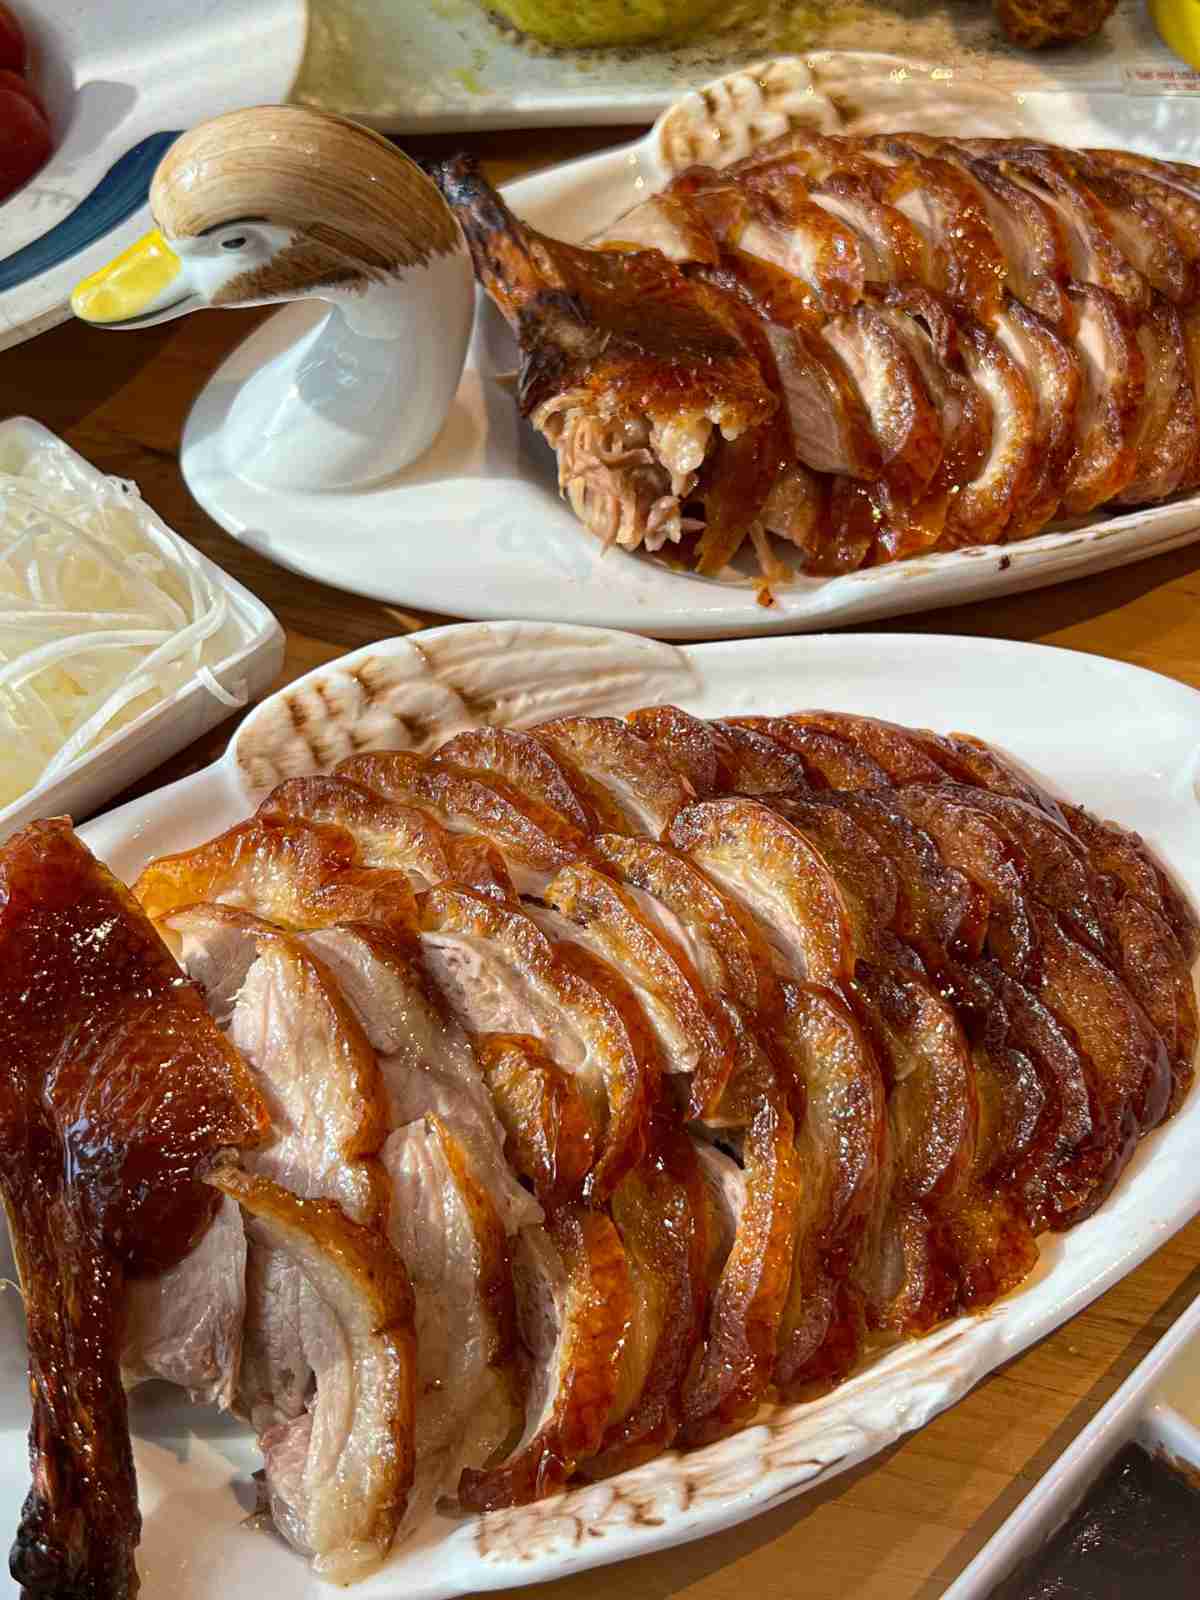 A platter of beijing roast duck